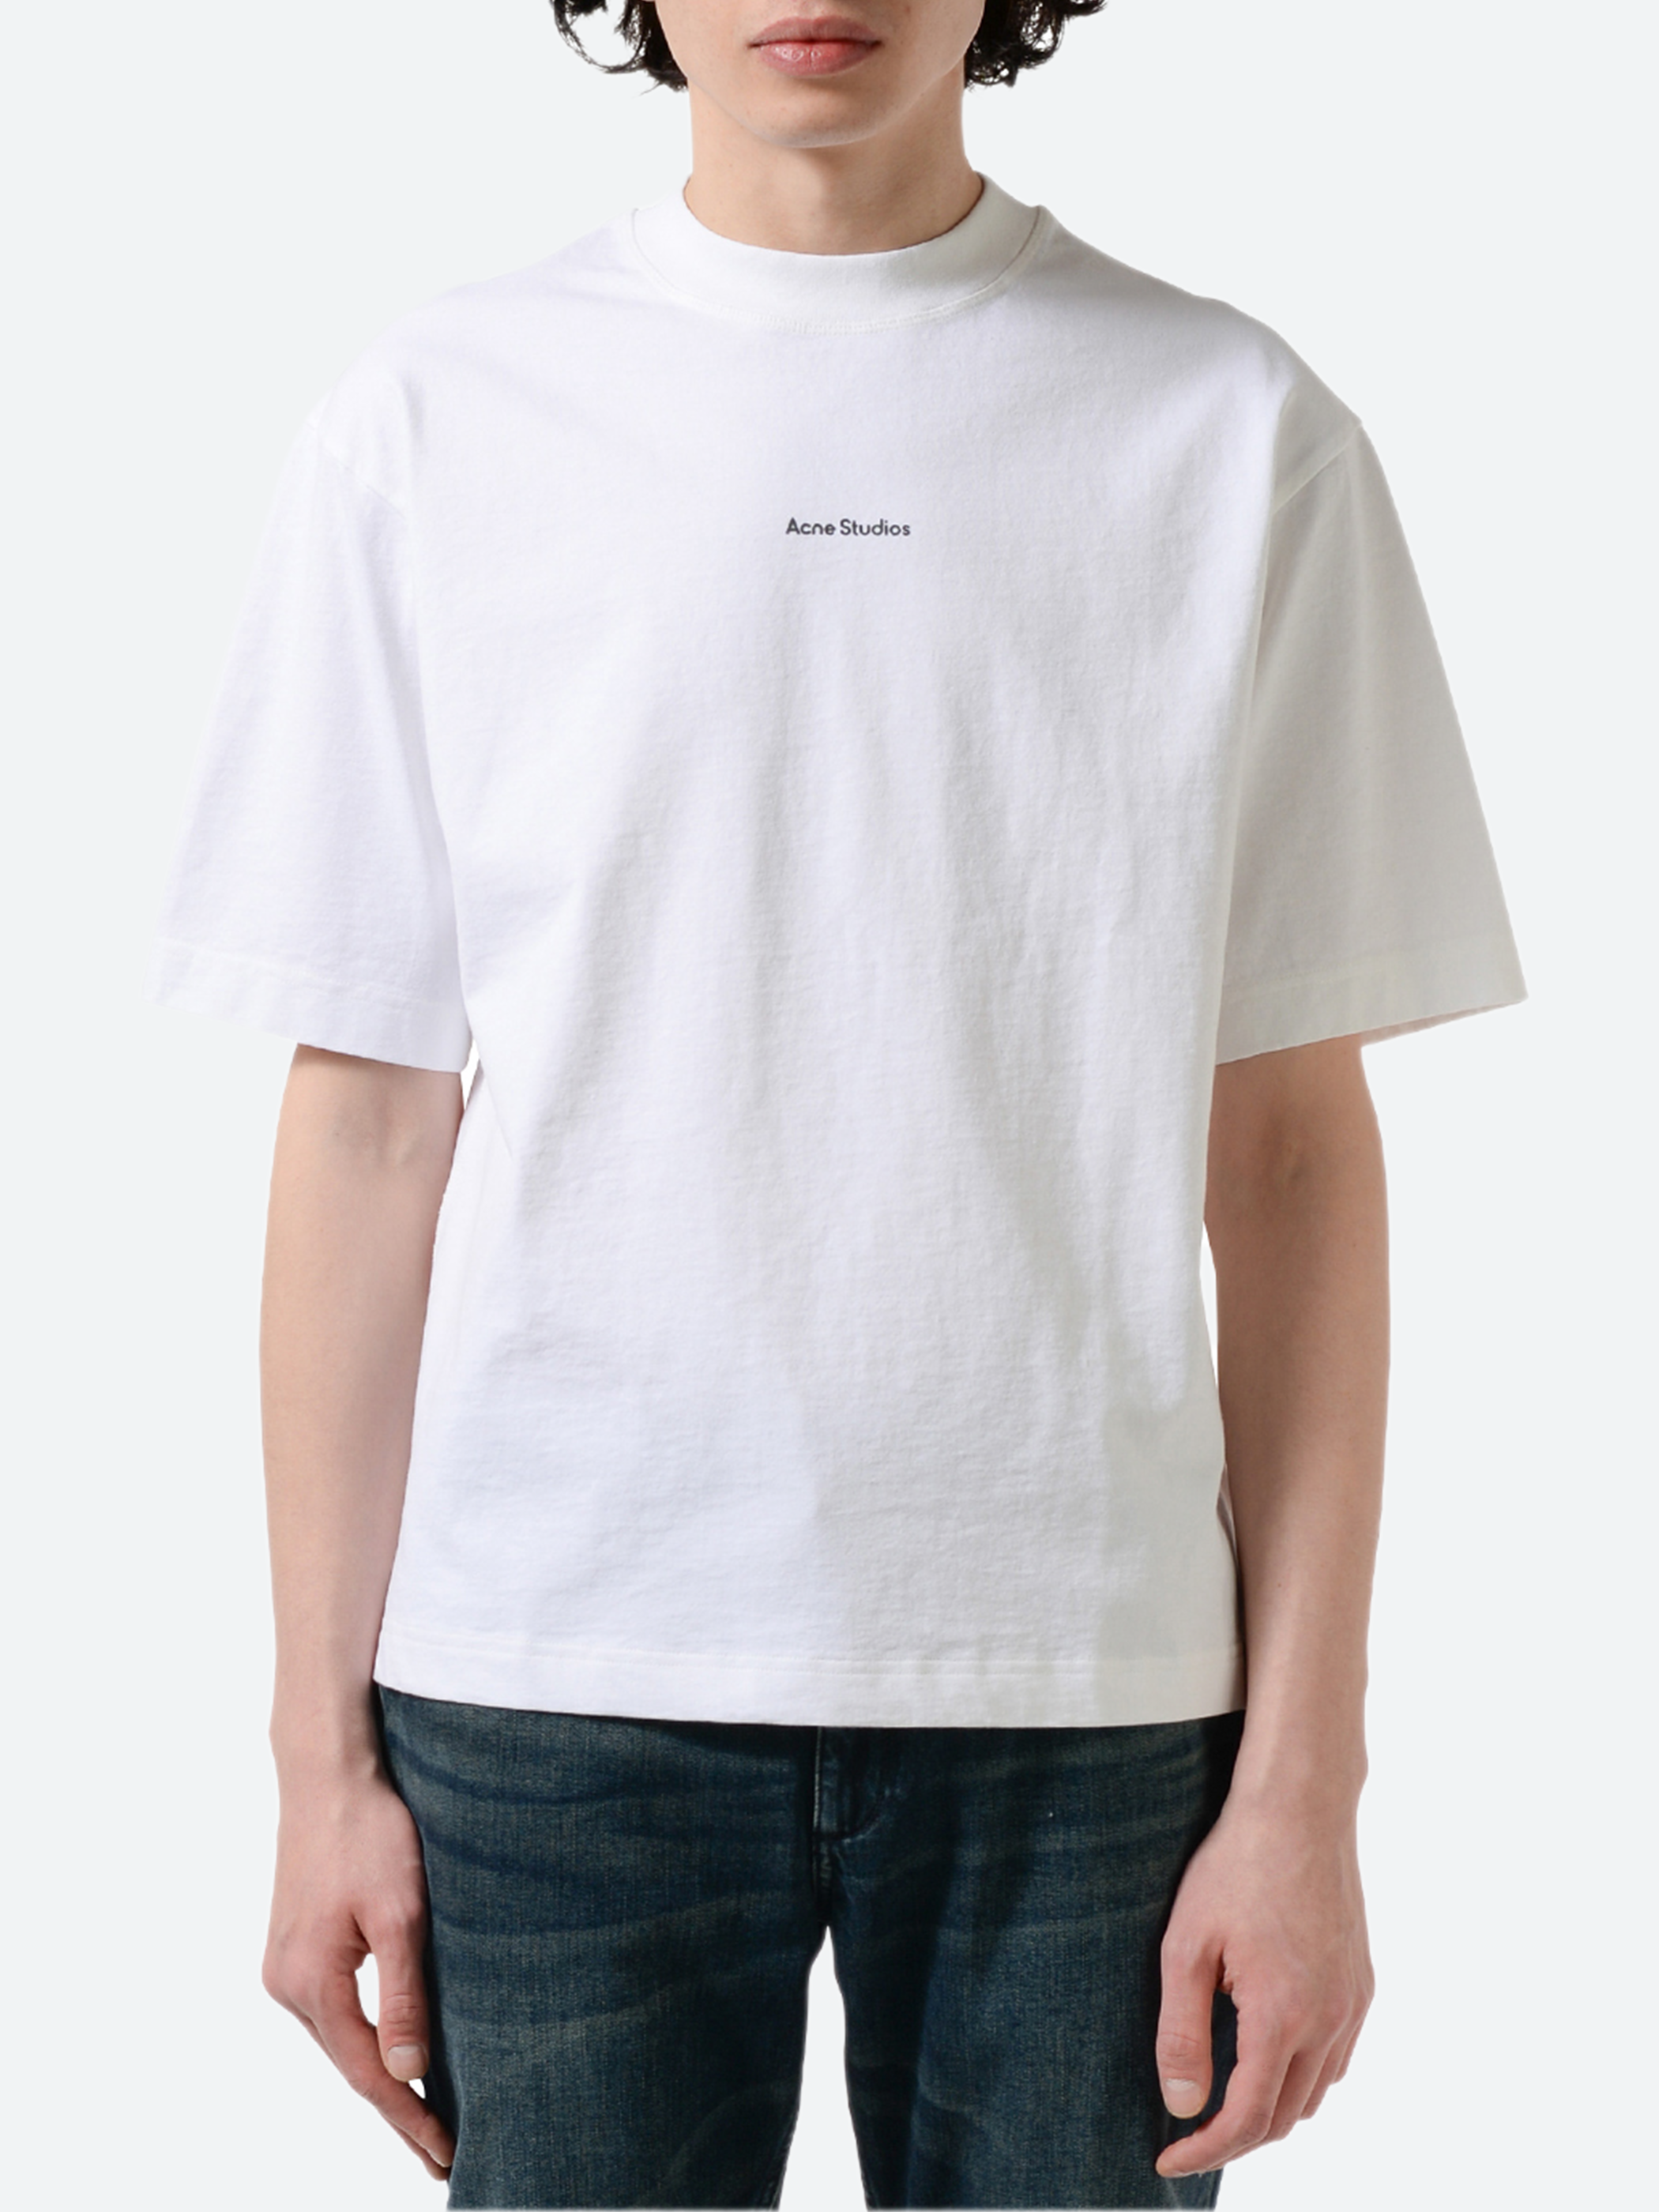 Printed T-Shirt